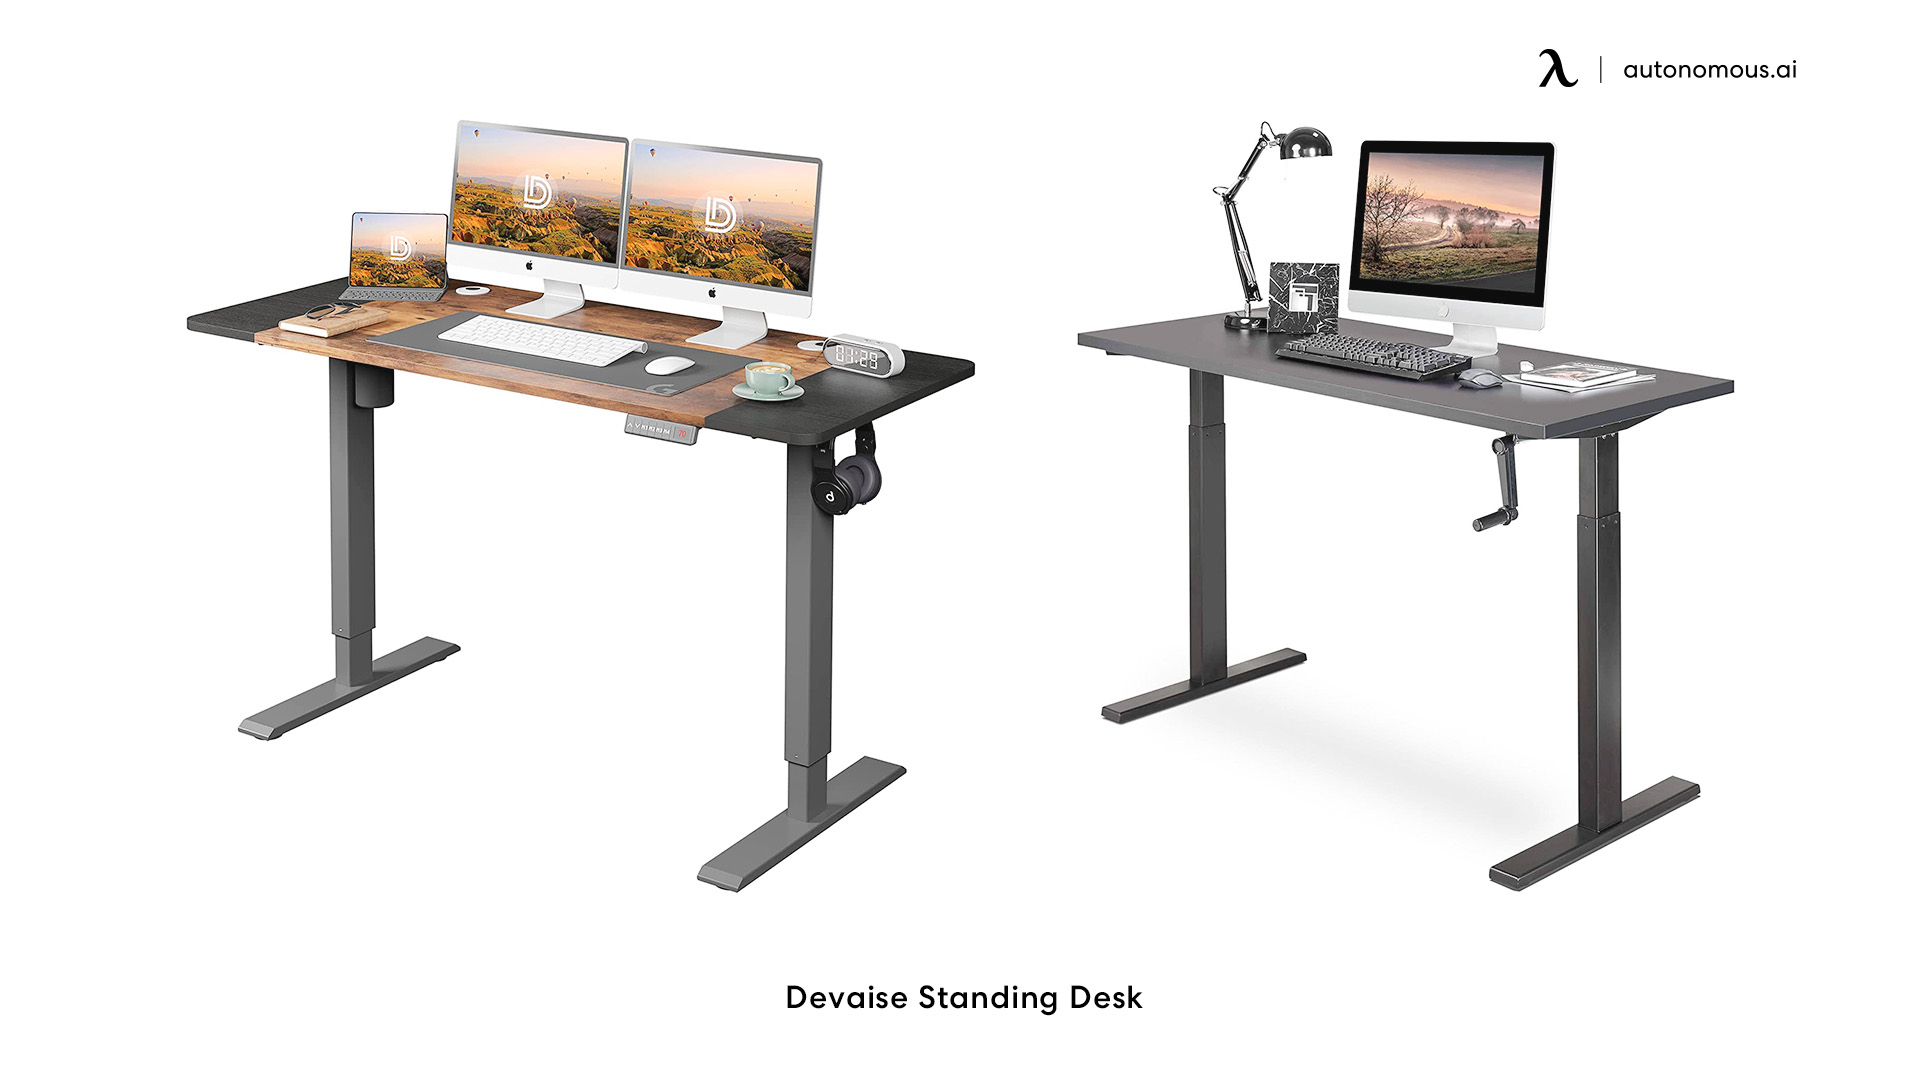 Devaise Standing Desk